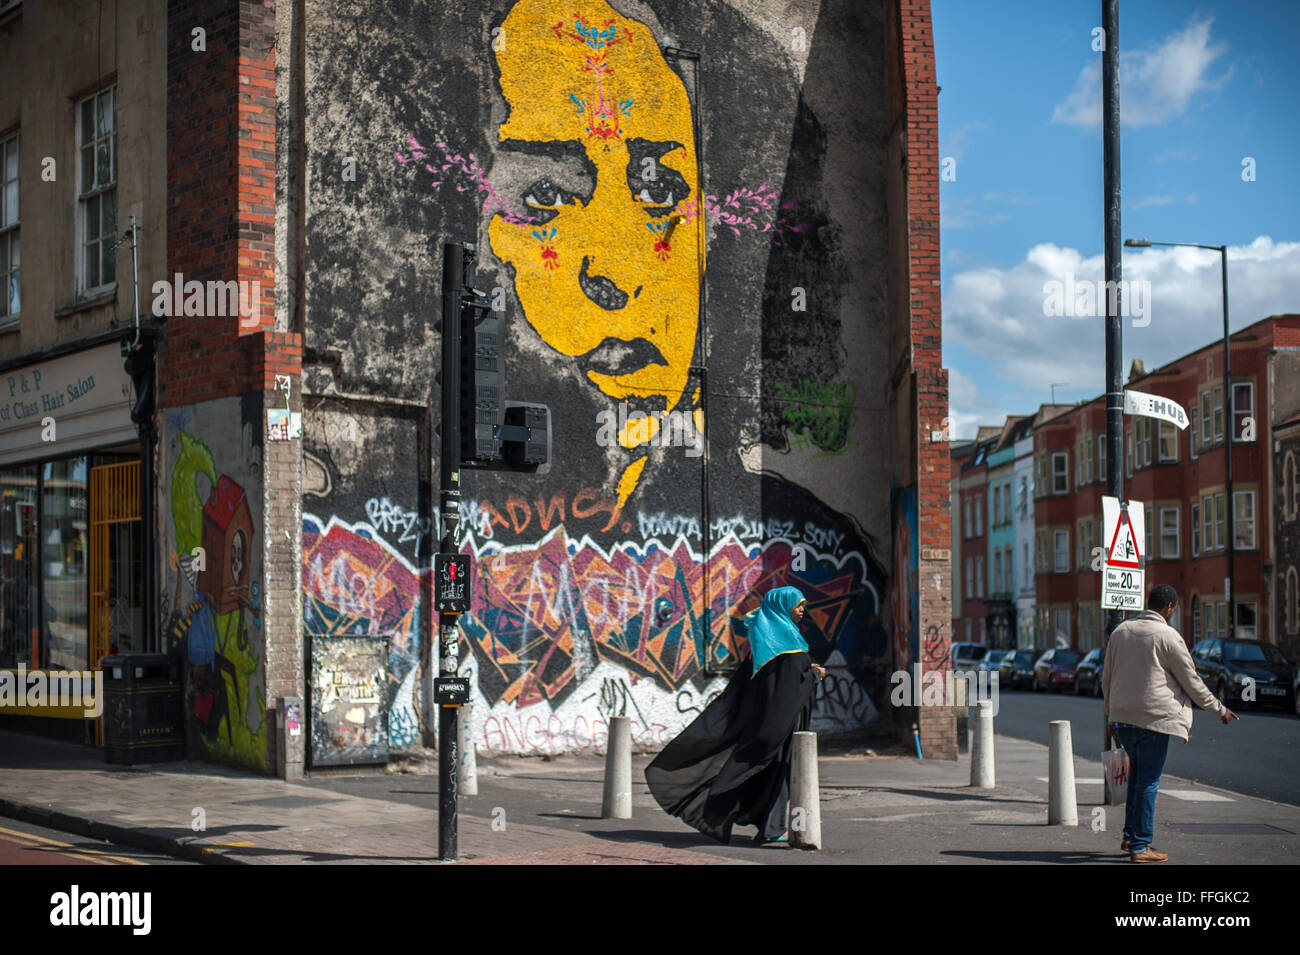 Muslim Somali couple and urban street art mural, Stokes Croft, Bristol, England Stock Photo